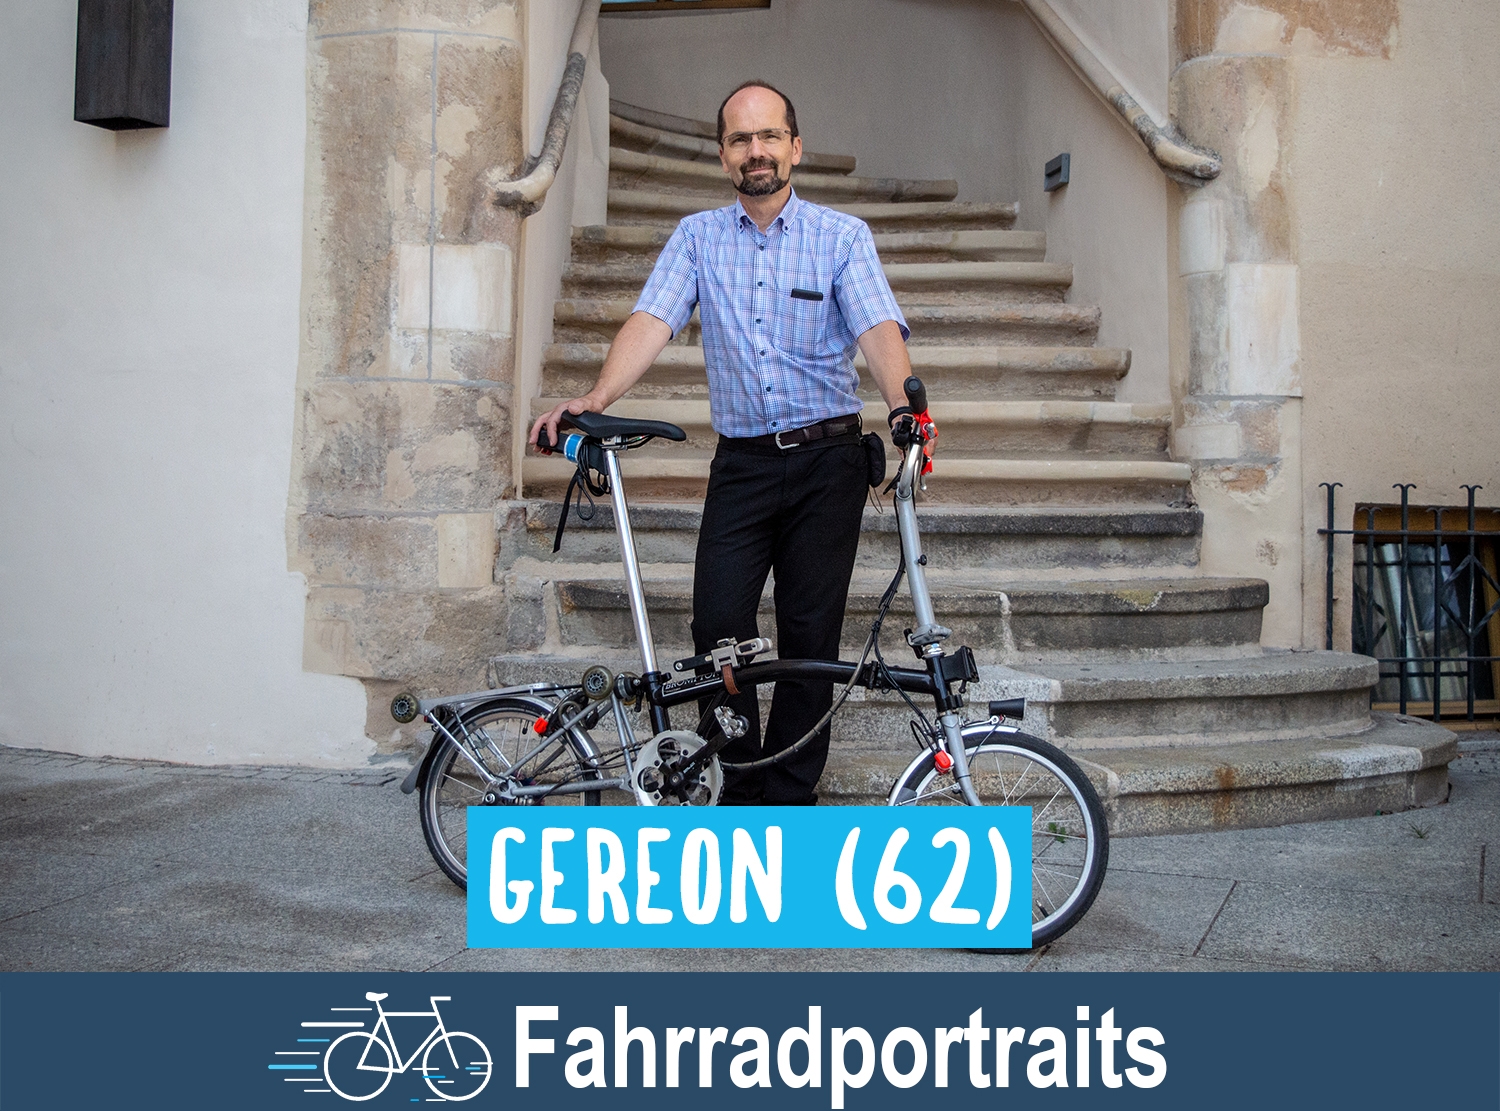 Fahrradportrait: Gereon (62)